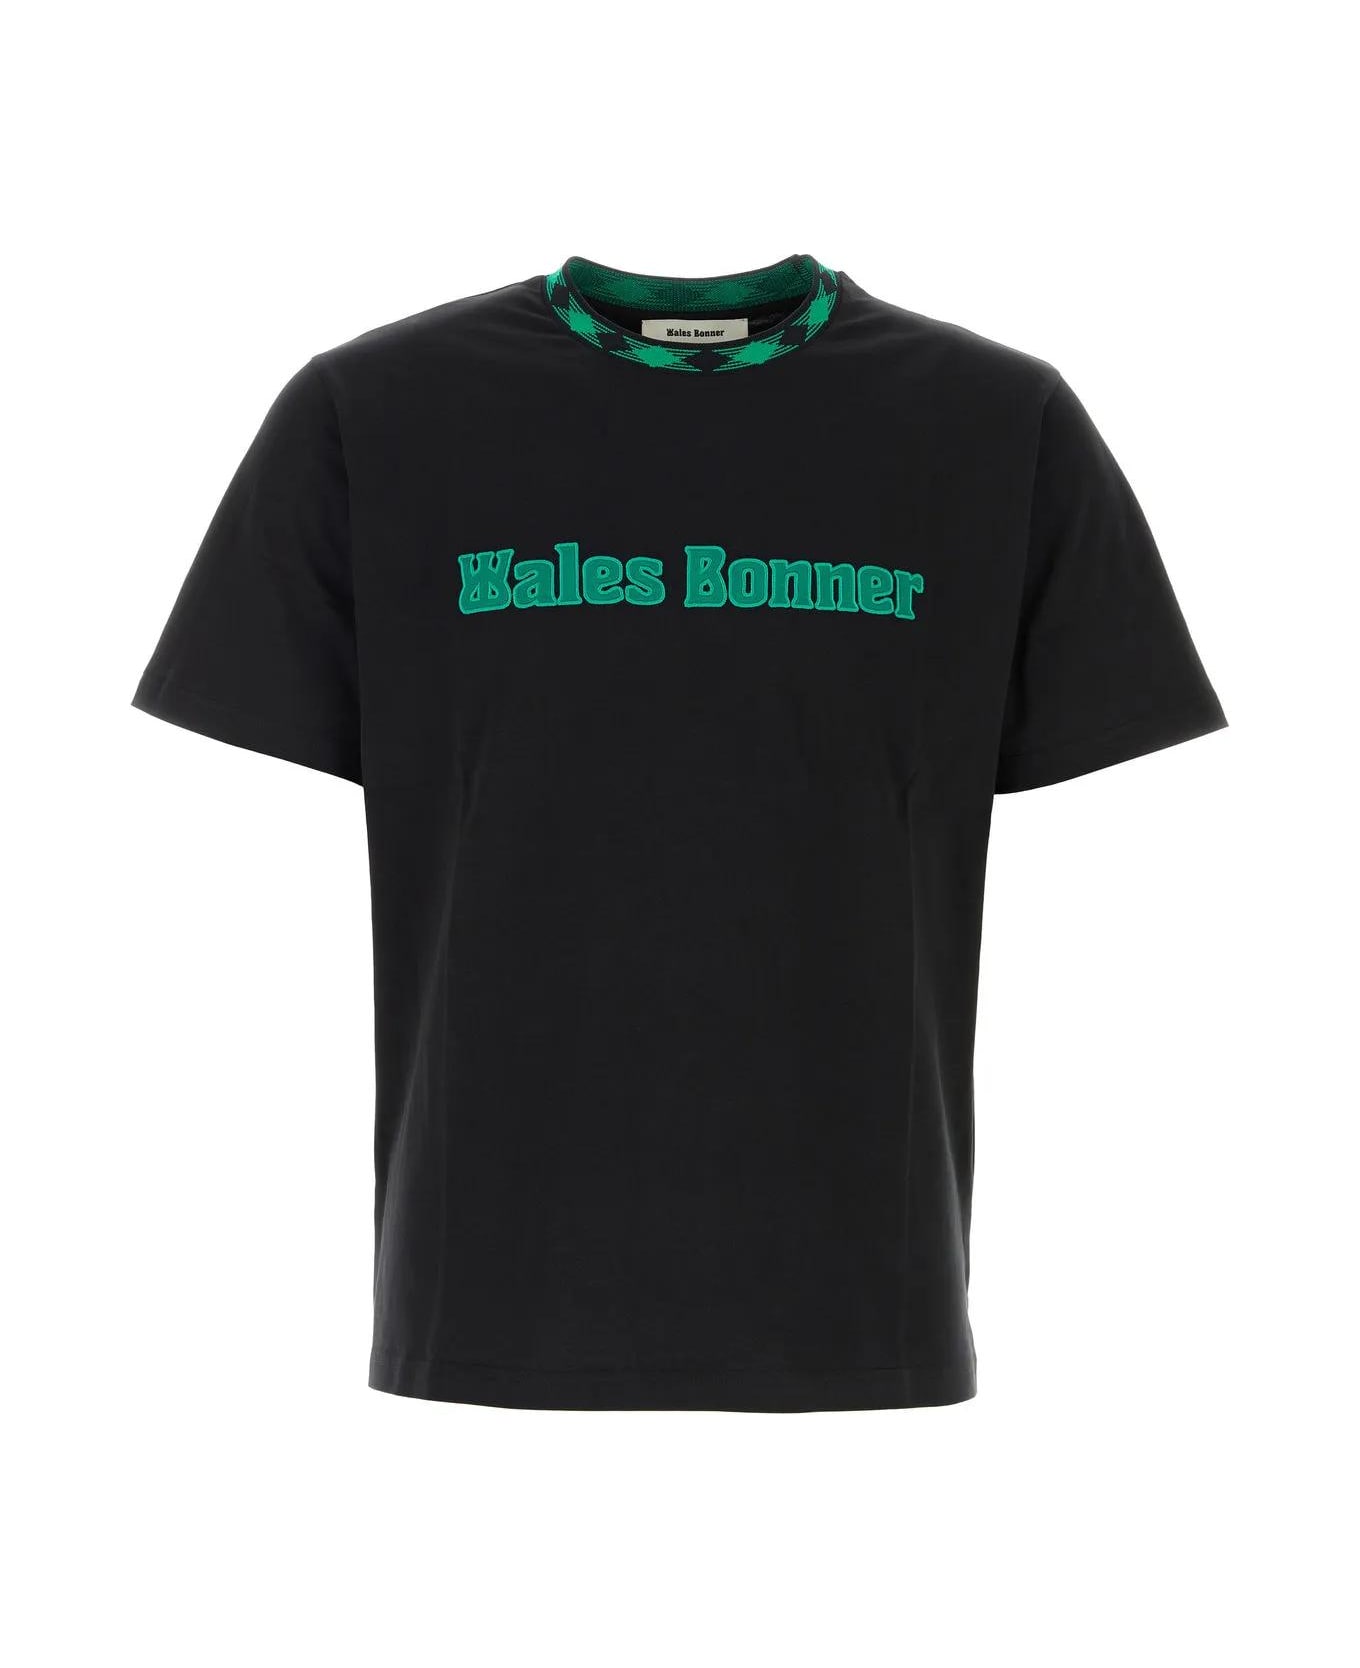 Wales Bonner Black Cotton Original T-shirt - Nero